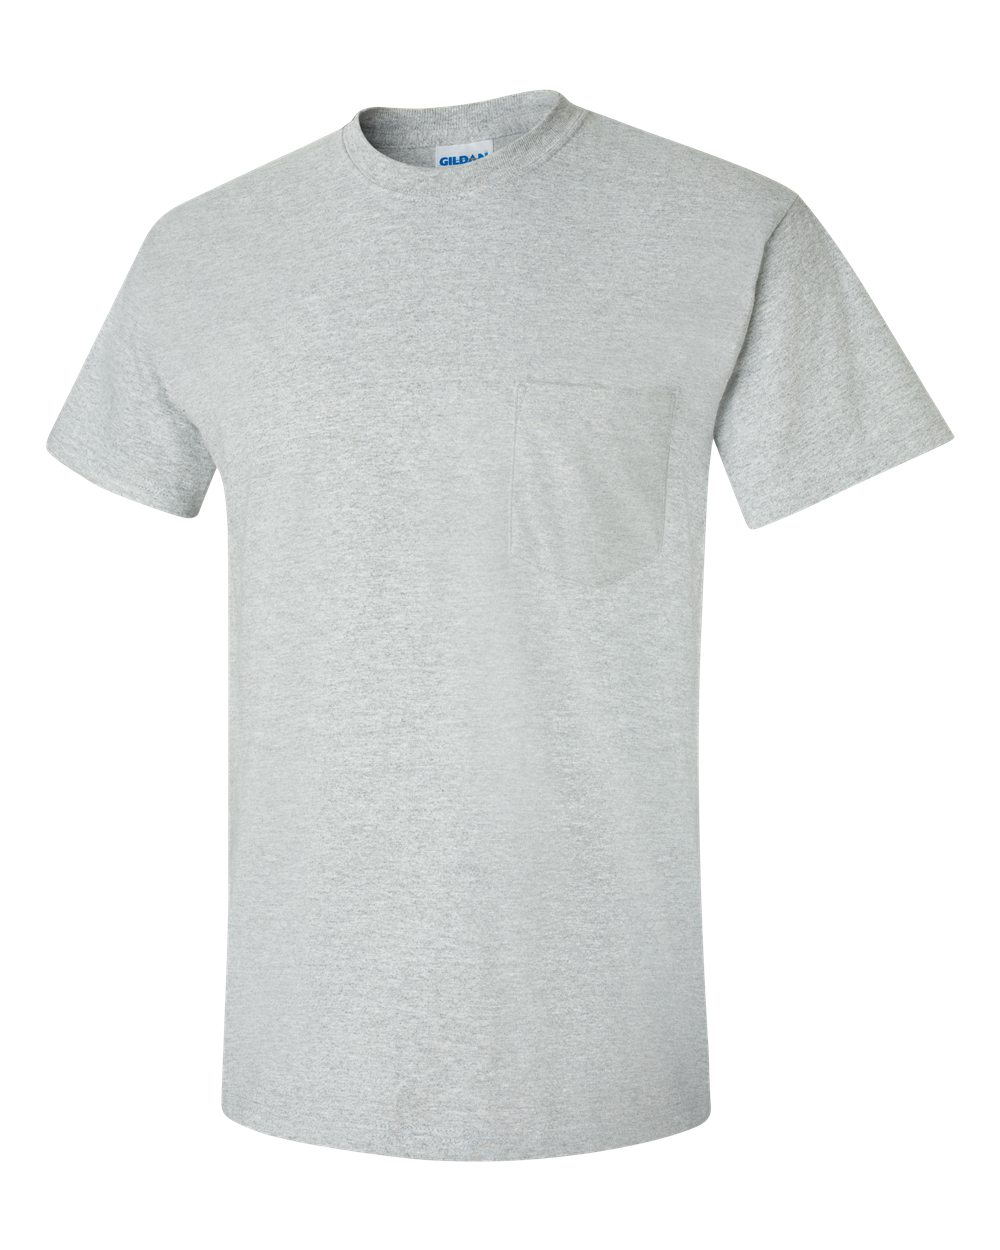 Gildan 2300 Ultra Cotton T-Shirt with a Pocket $6.27 - T-Shirts